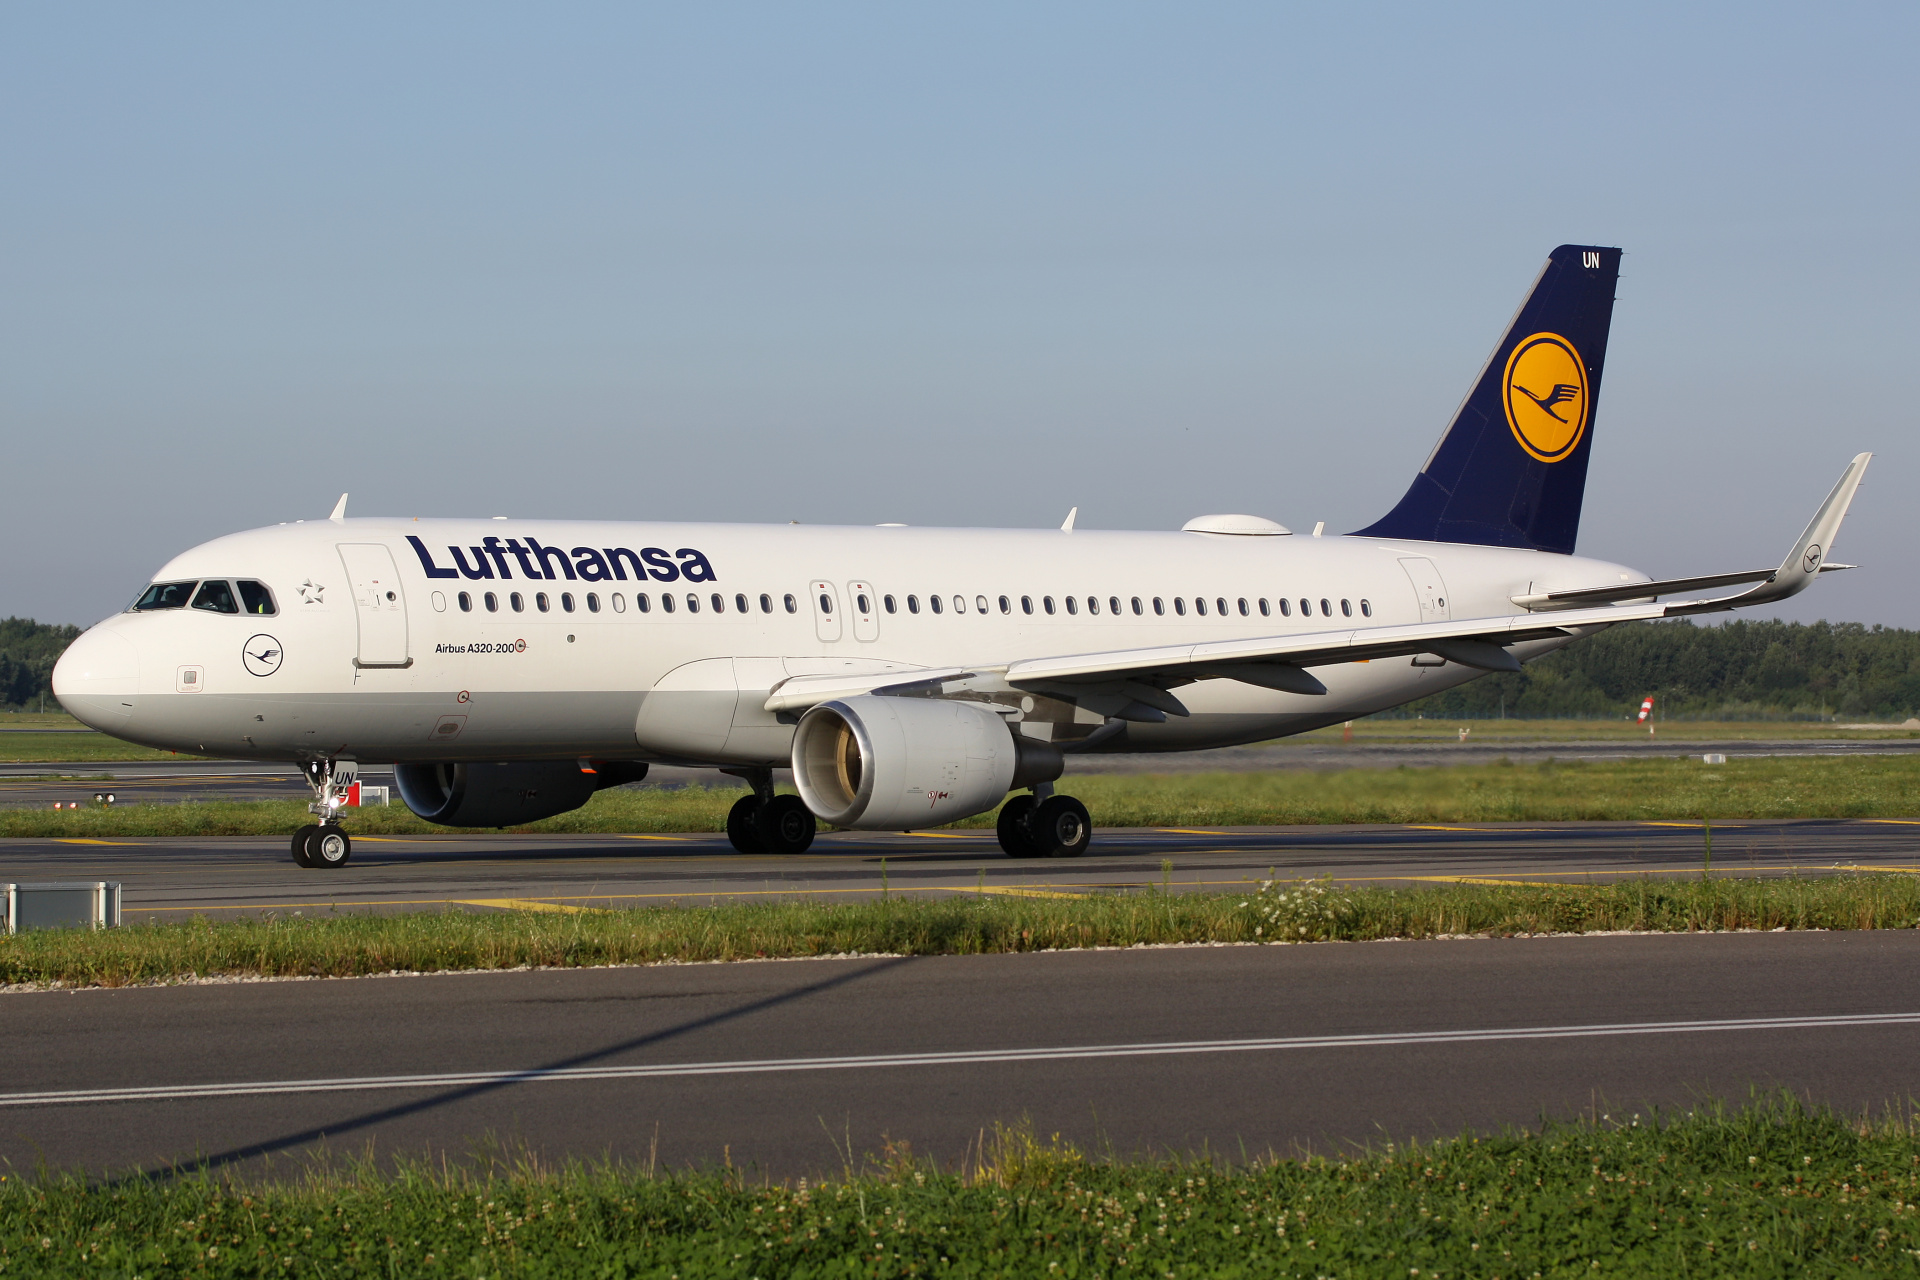 D-AIUN (Aircraft » EPWA Spotting » Airbus A320-200 » Lufthansa)